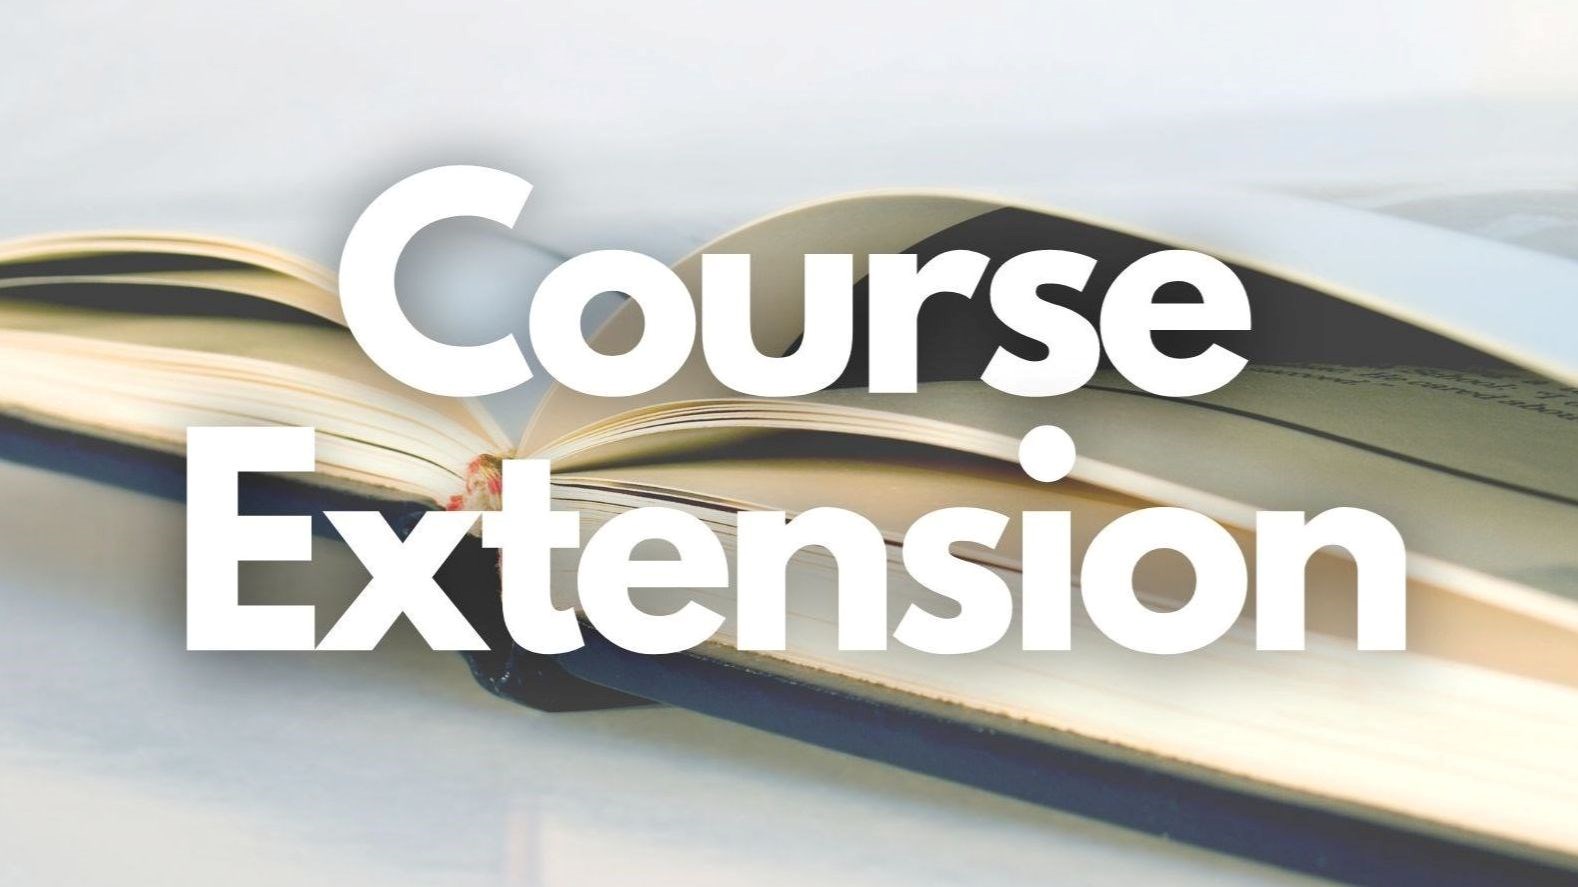 Course Extension